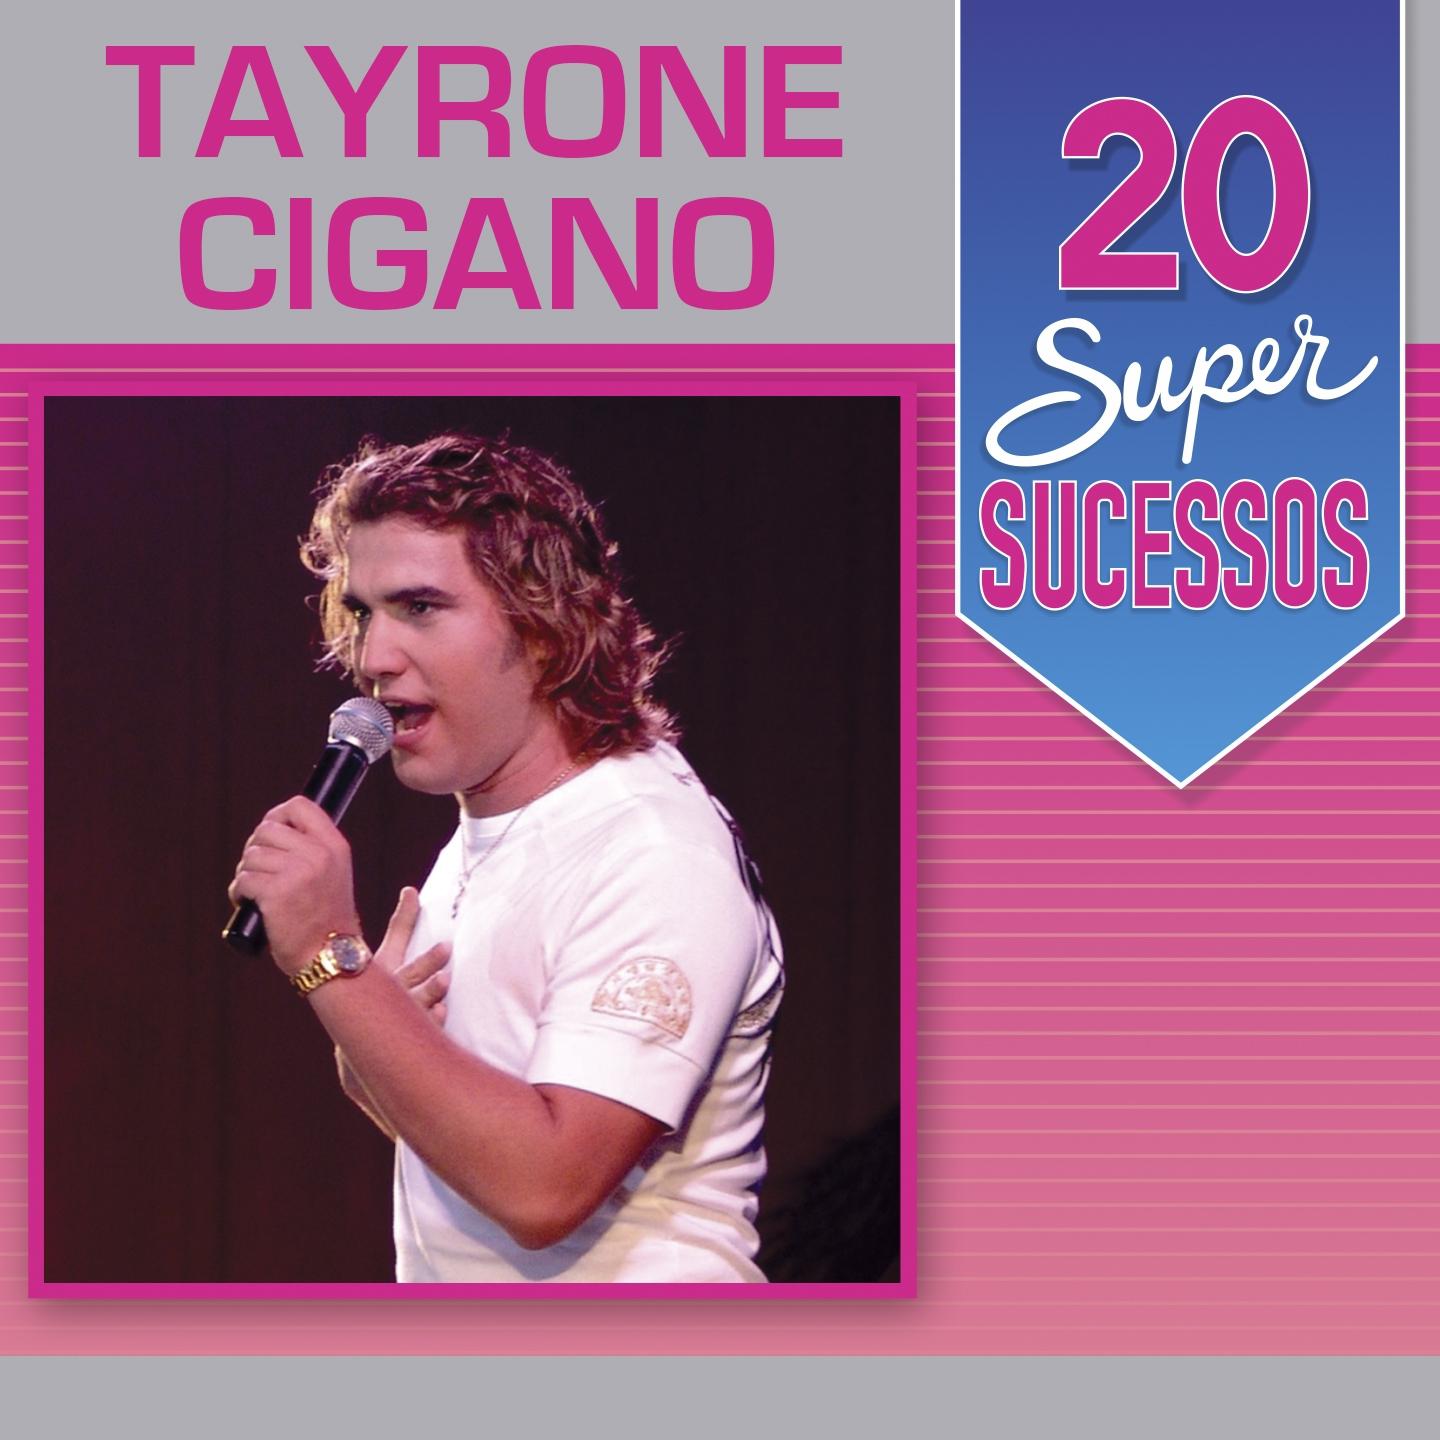 20 Super Sucessos: Tayrone Cigano